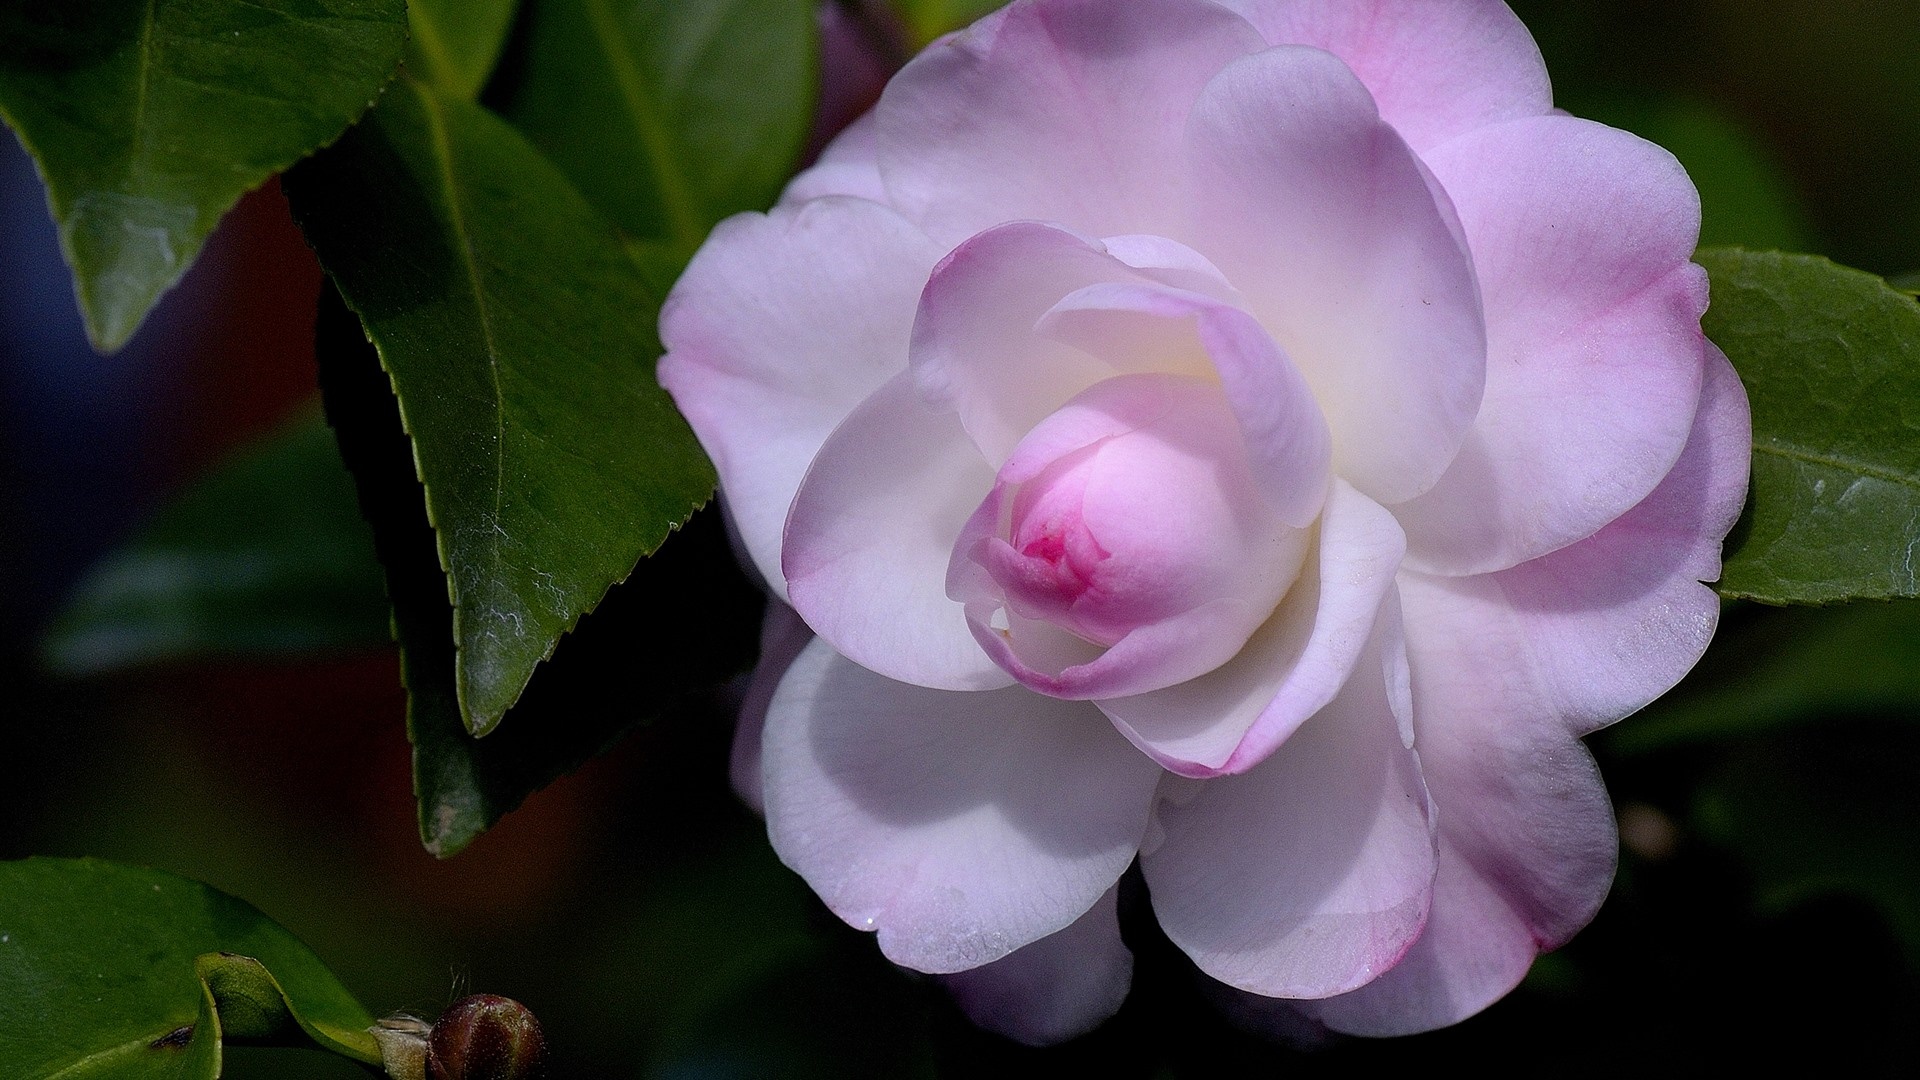 Pink camellia, Floral wallpaper, Beautiful blooms, Nature's gift, 1920x1080 Full HD Desktop